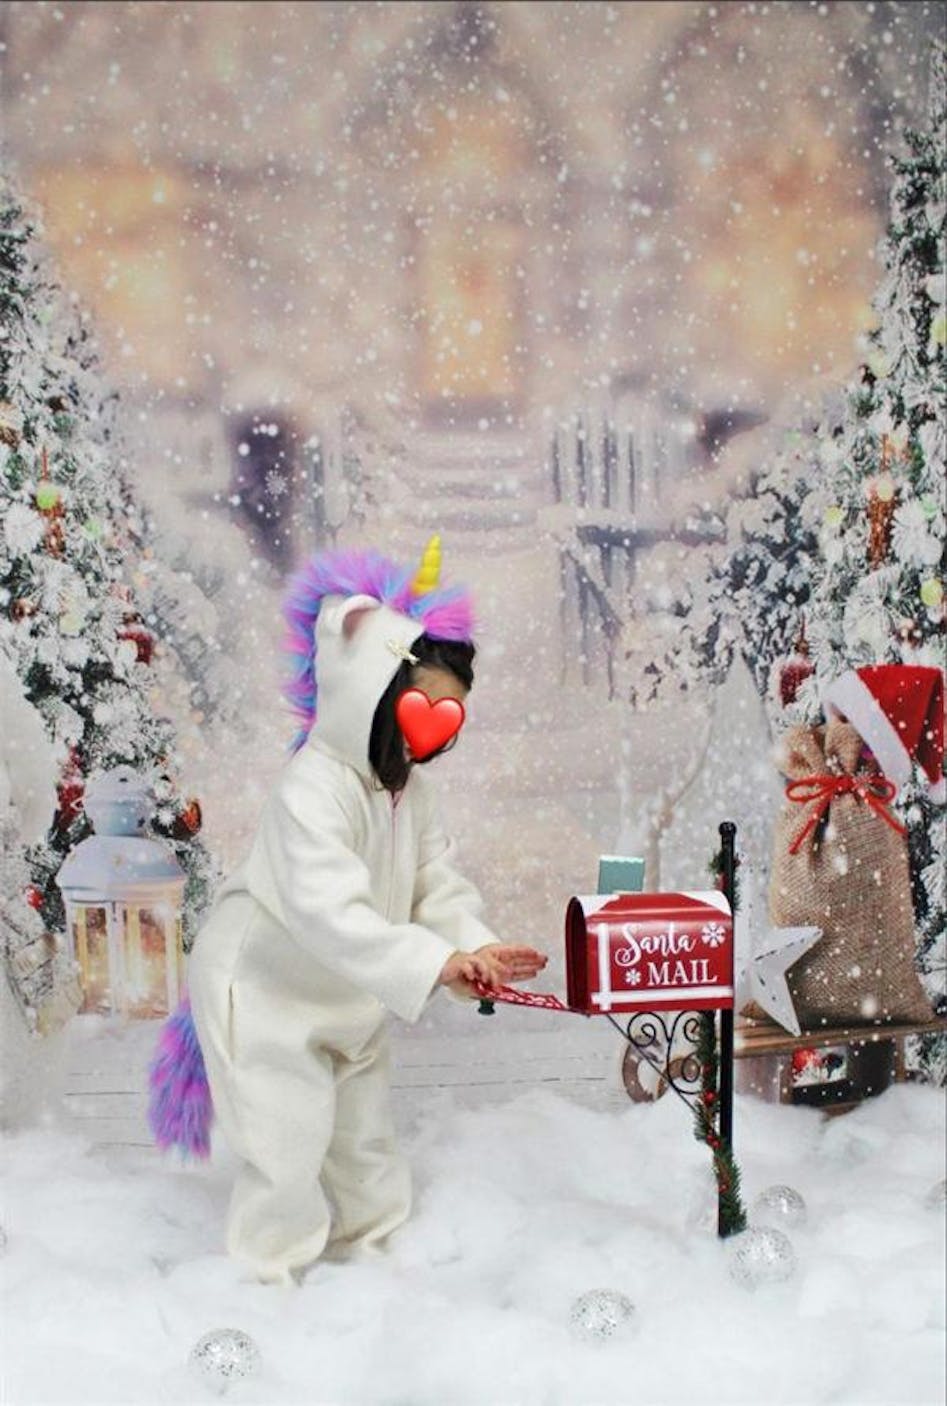 Lofaris Glitter Stars and Jingle-Bell Christmas Tree Backdrop | DIY Christmas Backdrop | Christmas Photo Backdrop | Winter Wonderland Backdrop